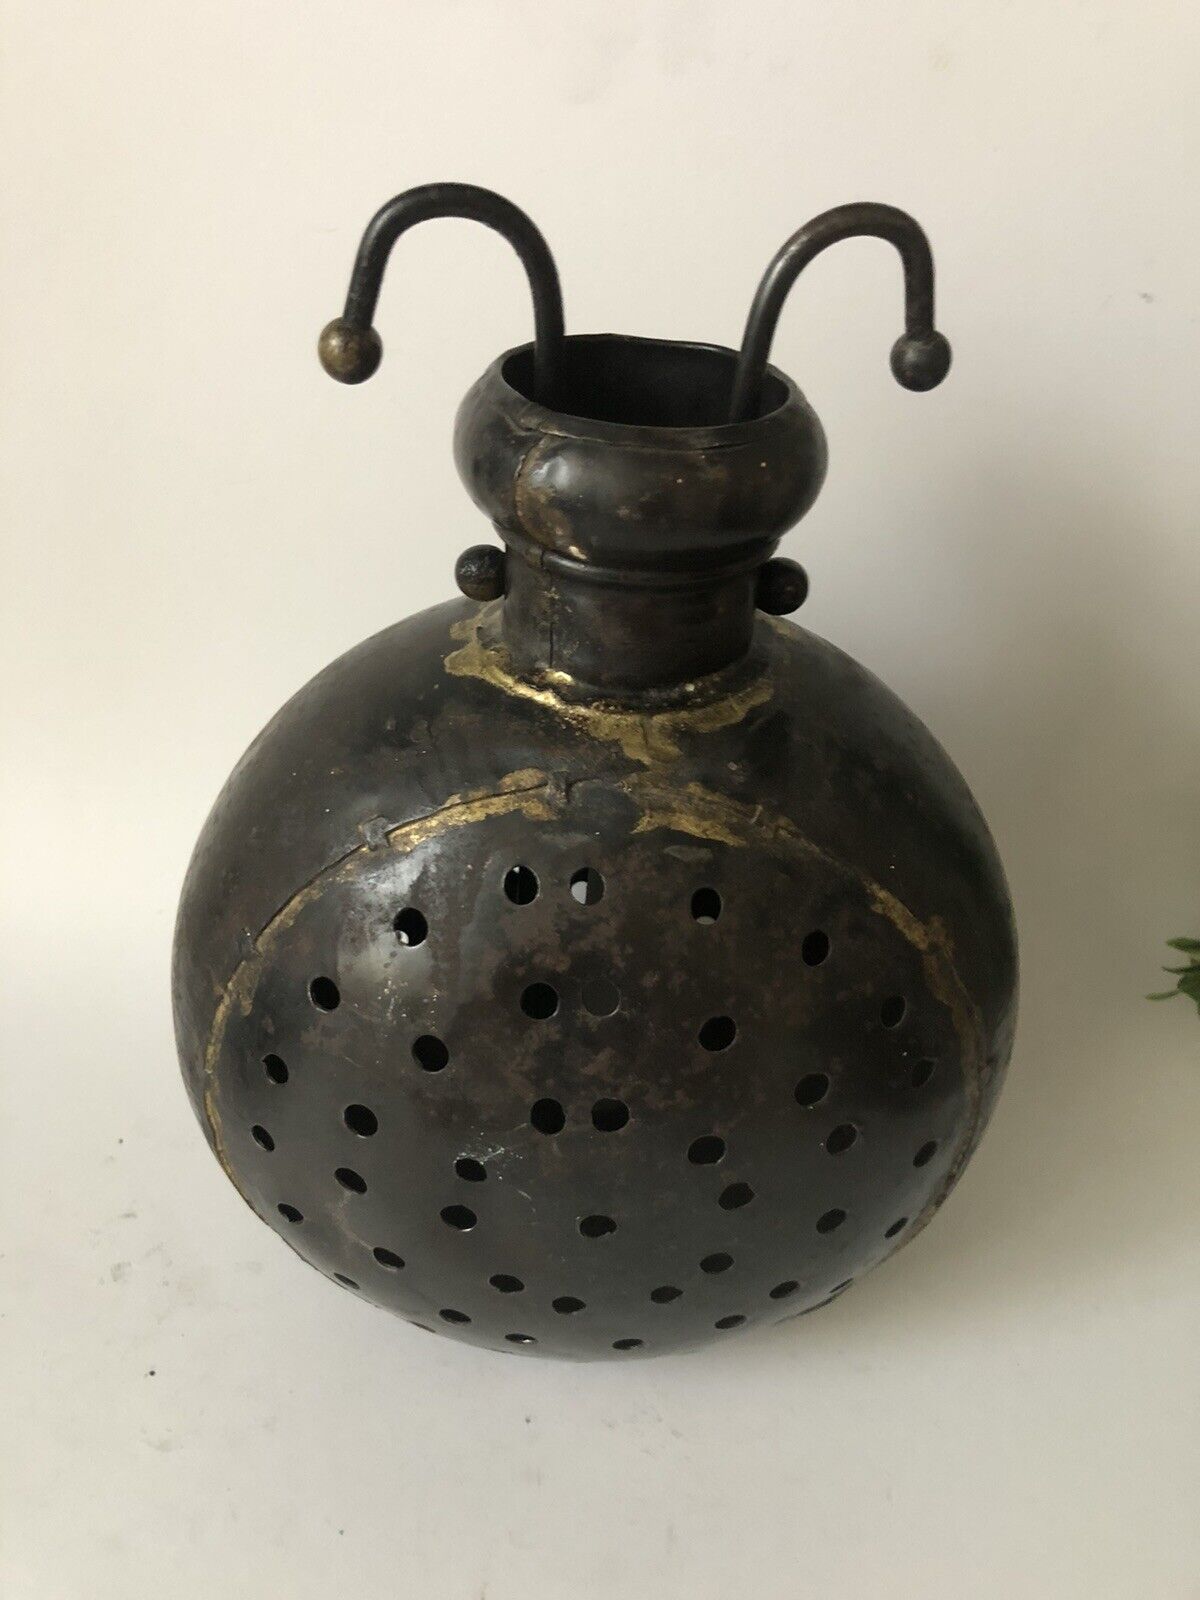 Vintage /Candle lantern Pressed Steel Iron / Lamp Light dot wall shadows ladybug